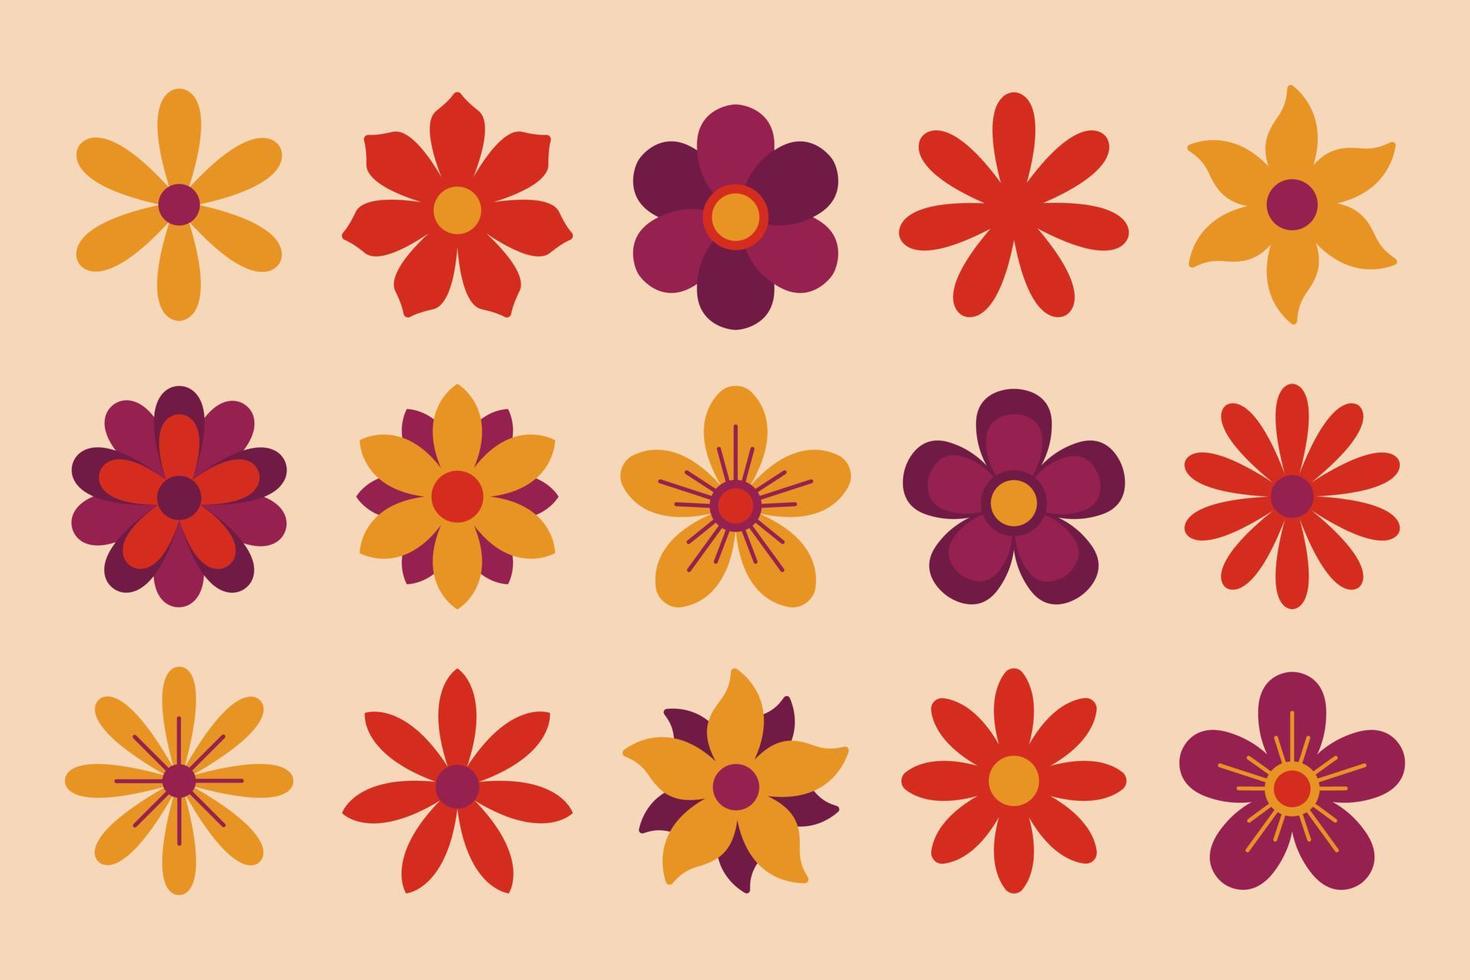 Retro 70s colorful vintage flowers. Geometric hippie floral collection. vector